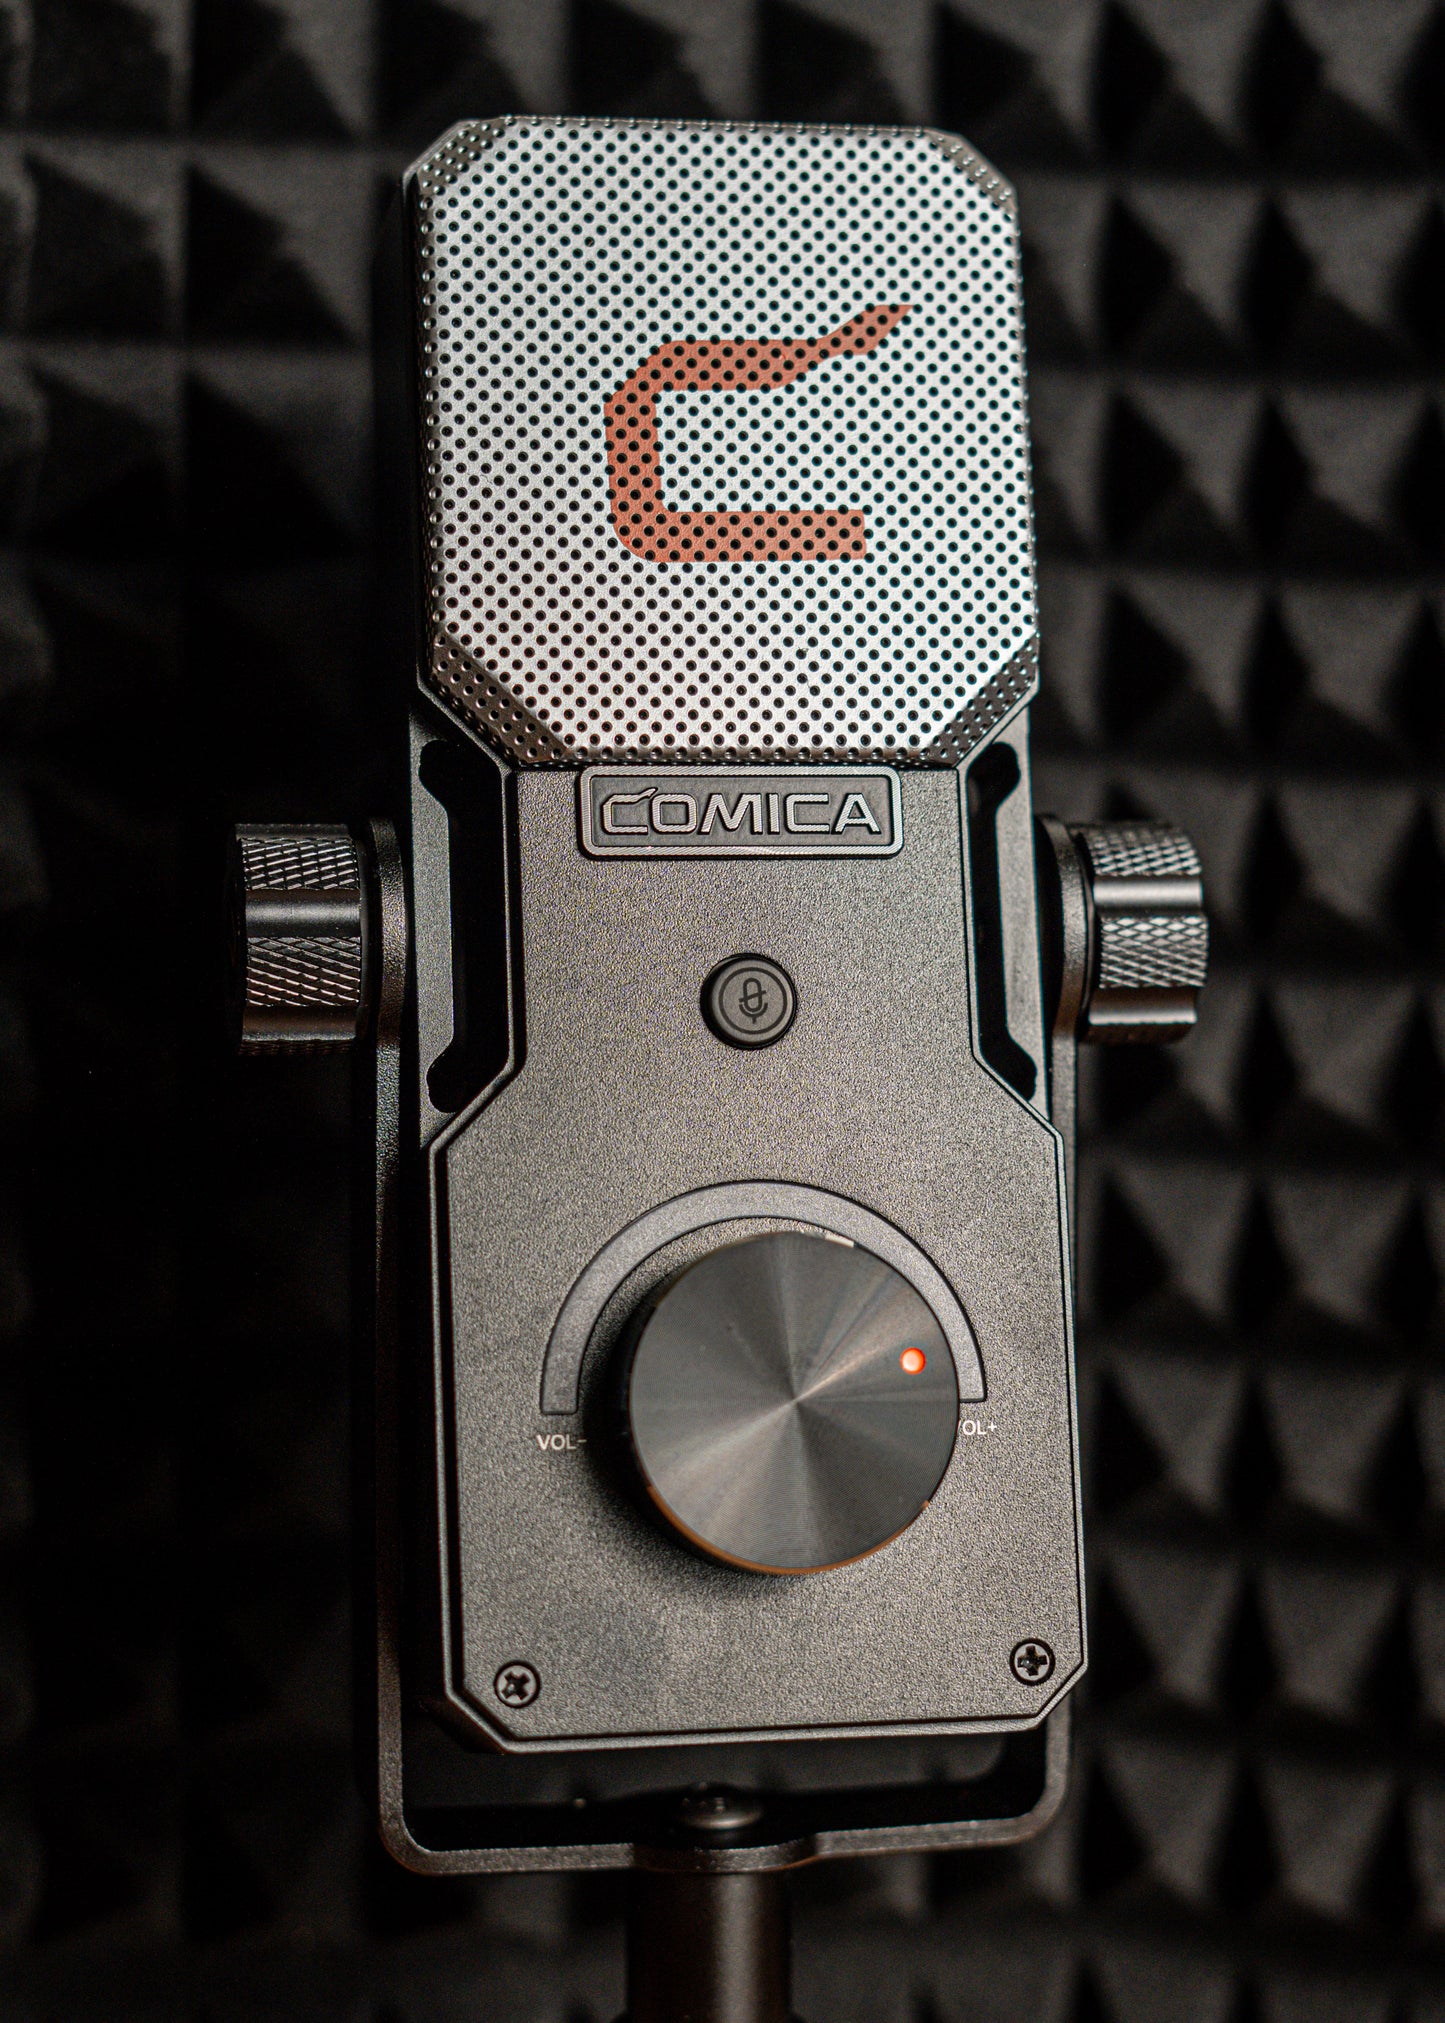 Comica STA-U1 USB microphone for streaming, studio, podcast